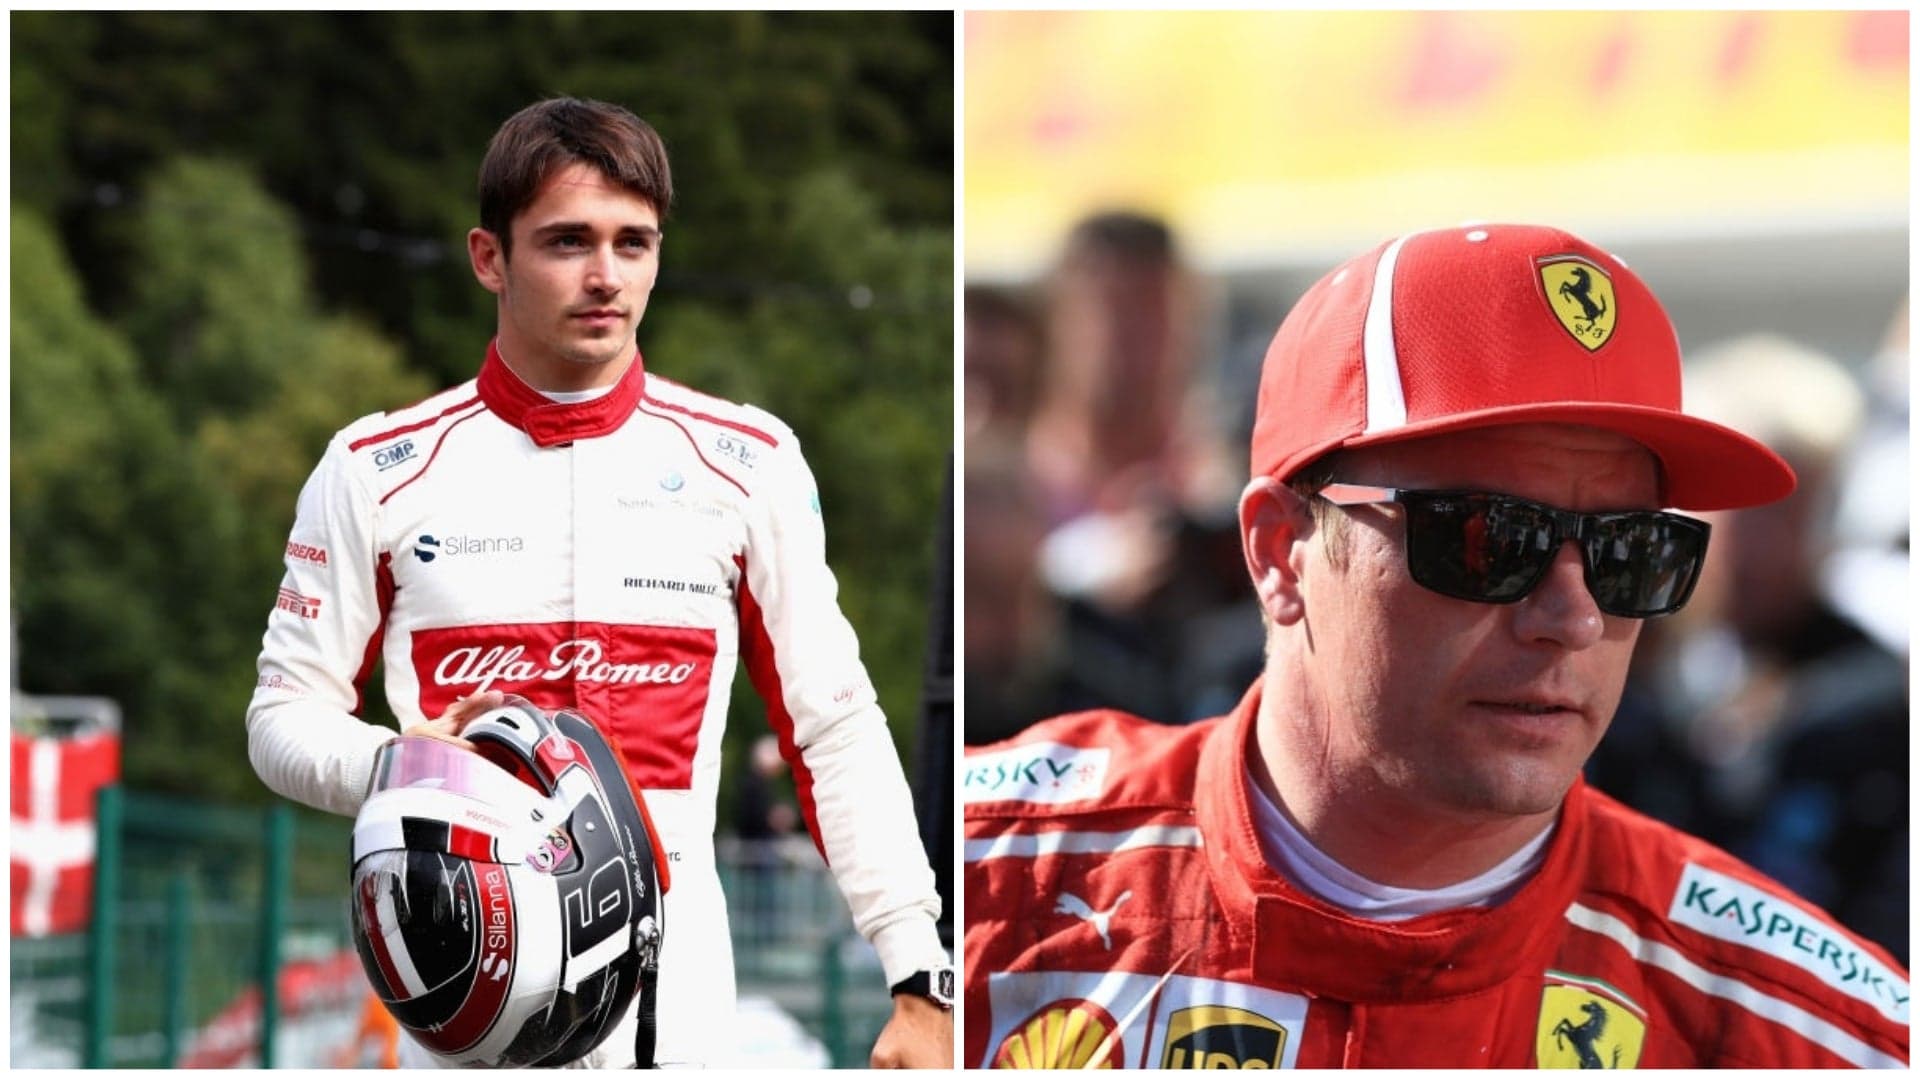 F1: Leclerc to Ferrari Confirmed, Räikkönen to Sauber in 2019